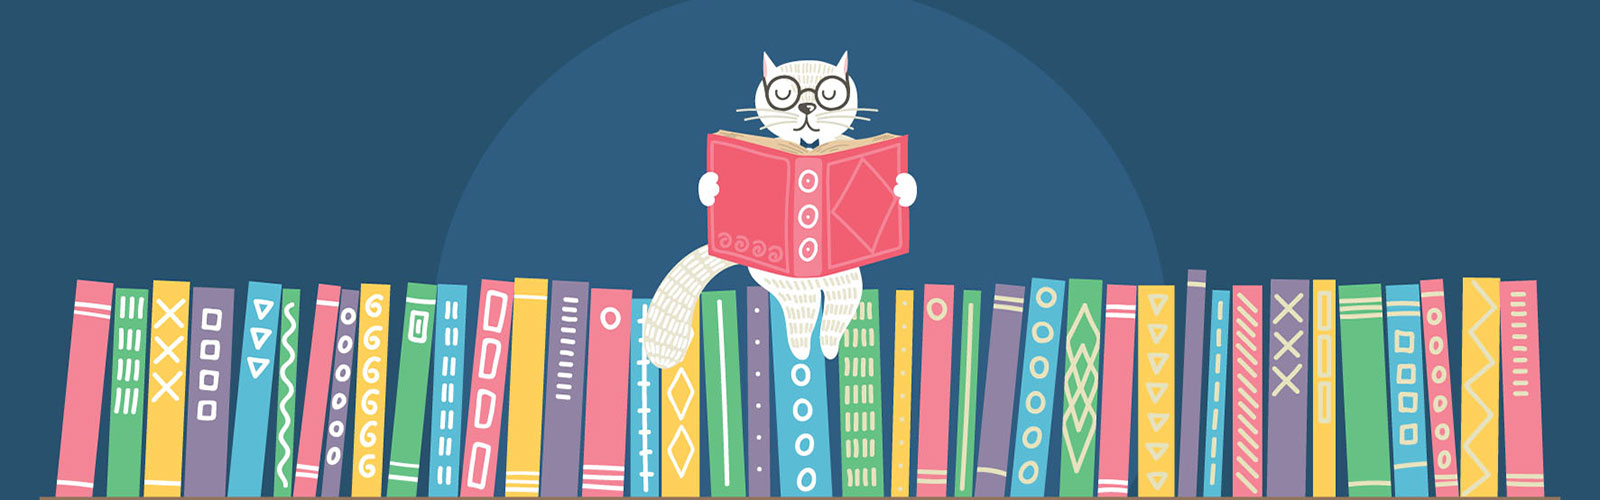 Cat reading on books